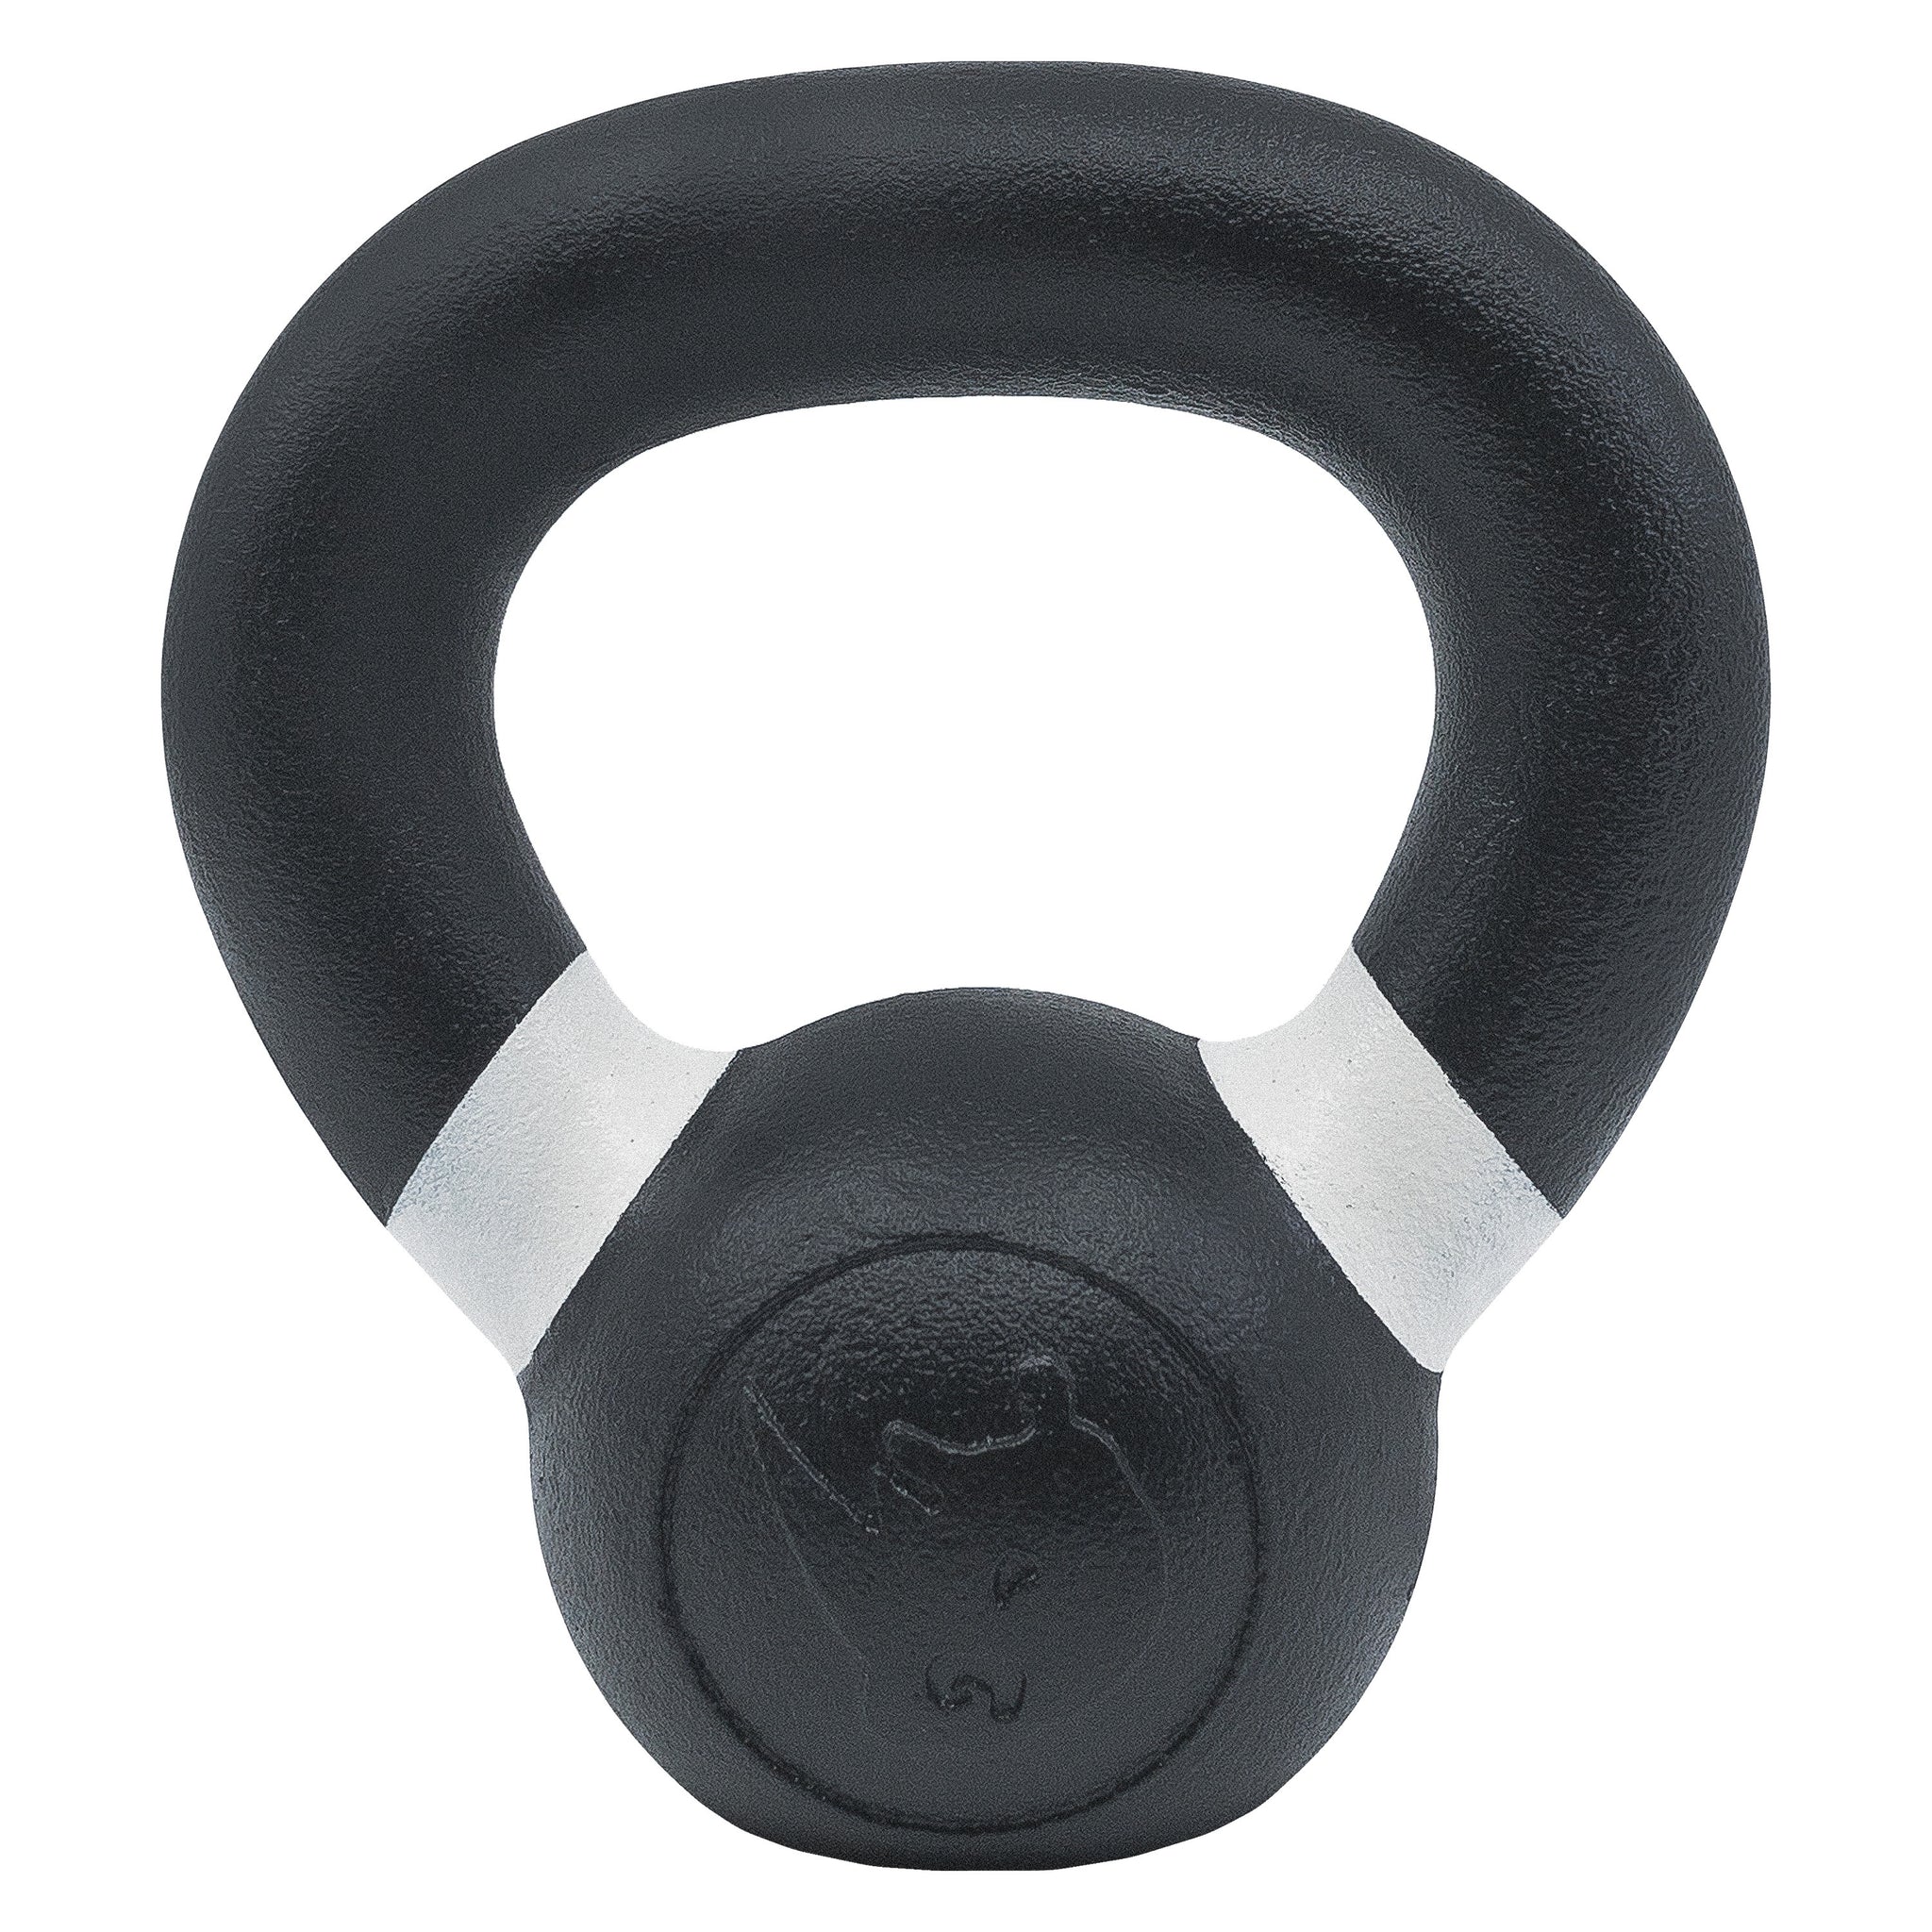 RHINO Fitness® Iron Kettlebell Series 5 lb RHINO Fitness fitness kettlebell Resistance Training